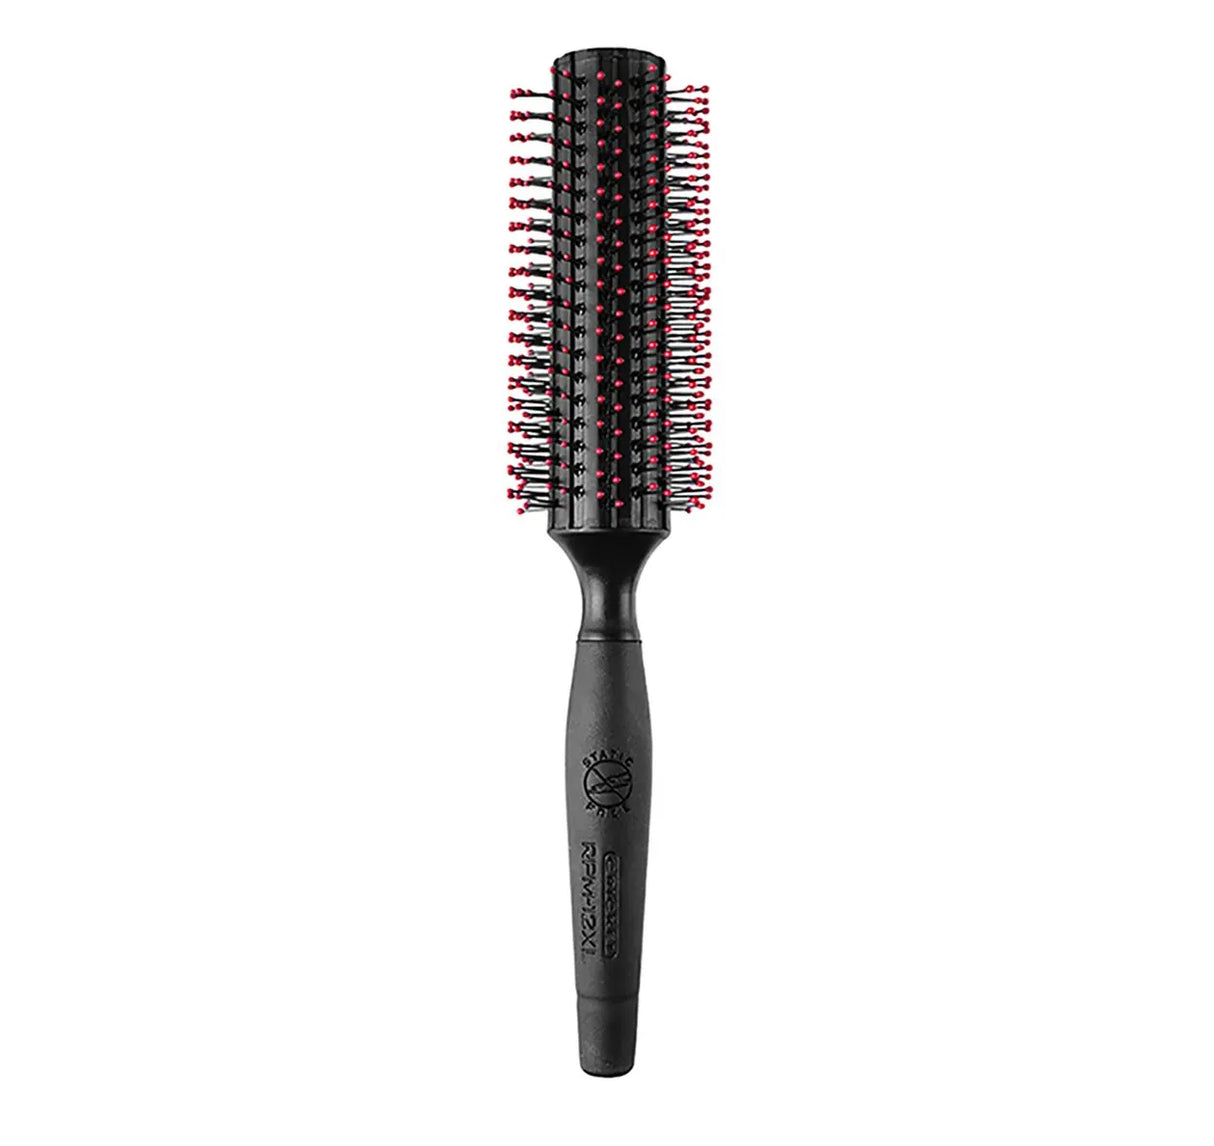 Cricket Static Free Round Hair Brush RPM 12 Row #708